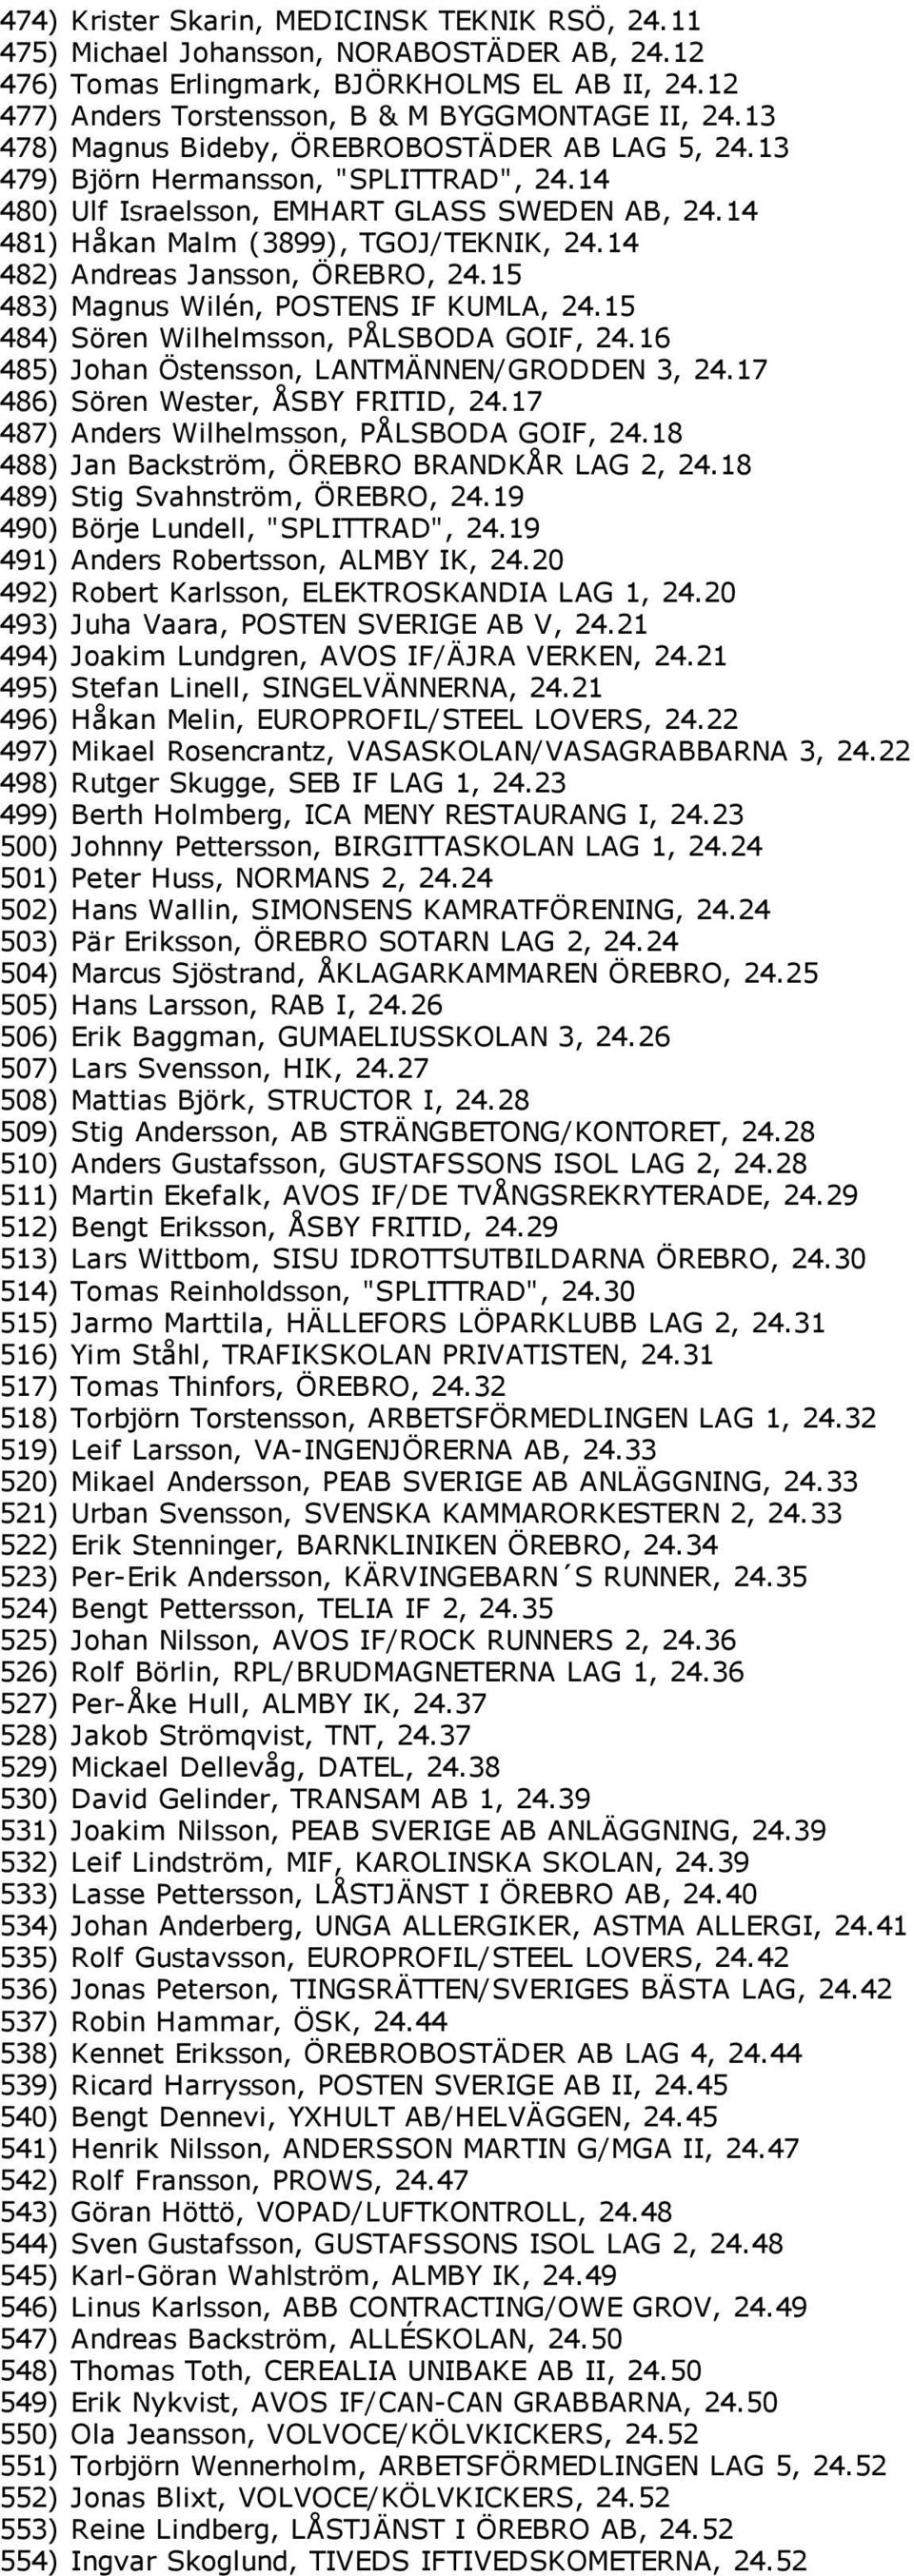 14 482) Andreas Jansson, ÖREBRO, 24.15 483) Magnus Wilén, POSTENS IF KUMLA, 24.15 484) Sören Wilhelmsson, PÅLSBODA GOIF, 24.16 485) Johan Östensson, LANTMÄNNEN/GRODDEN 3, 24.